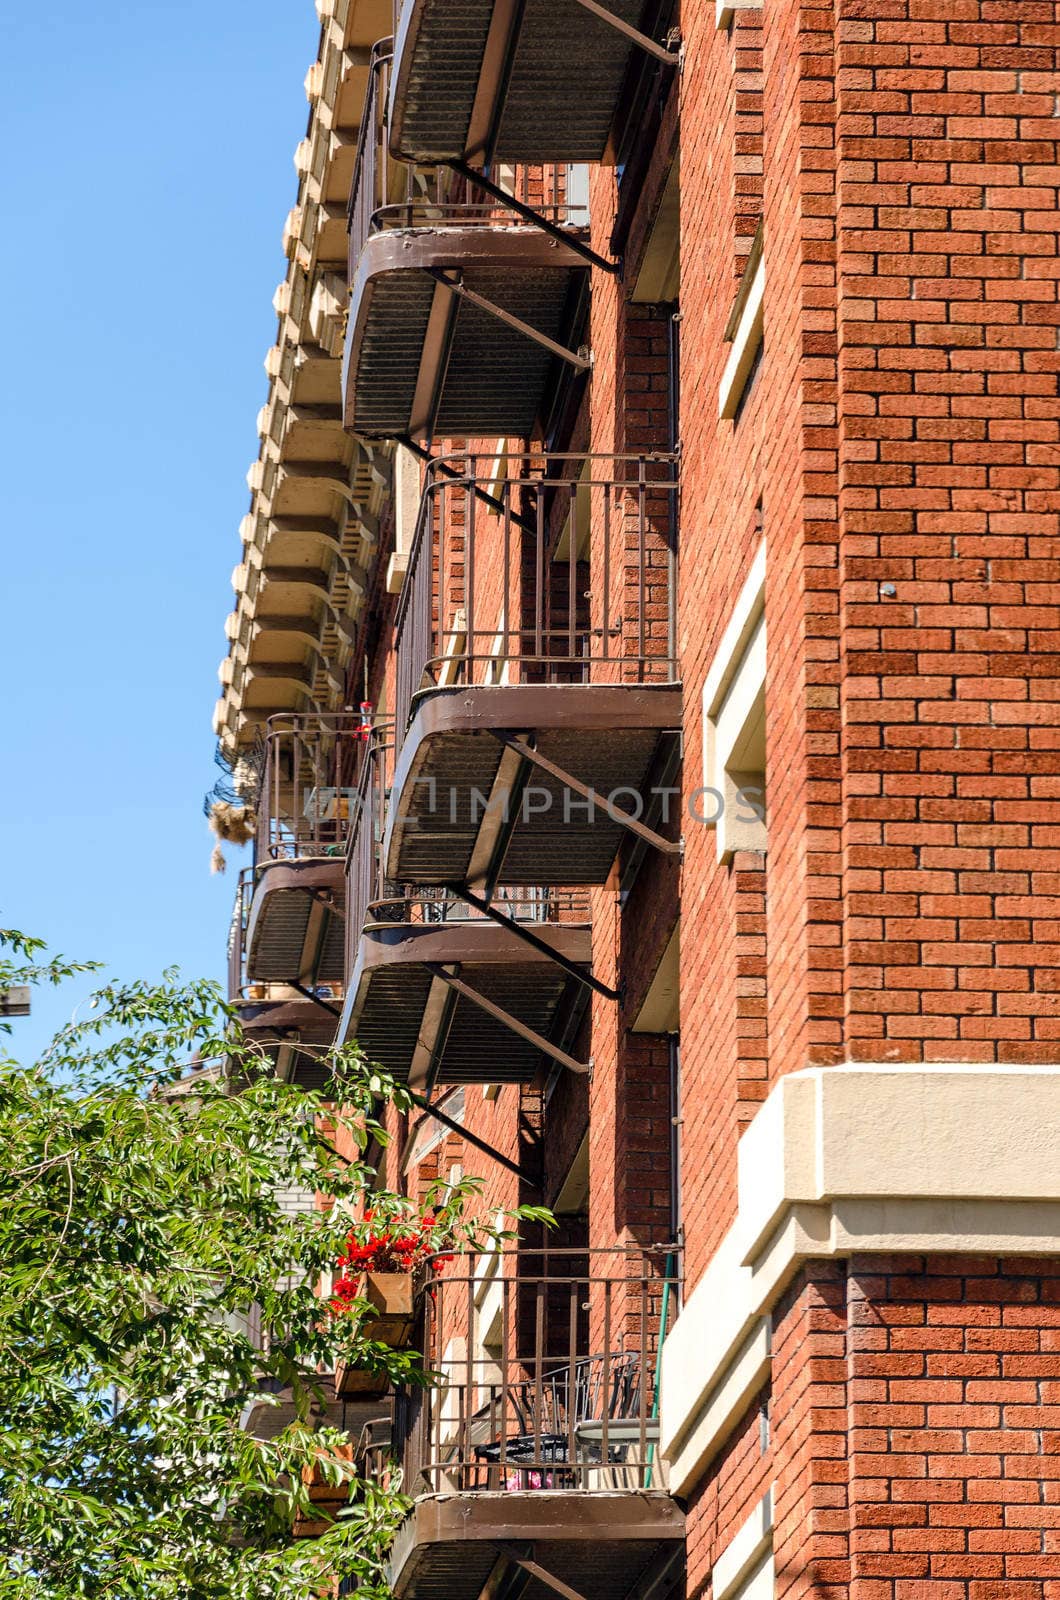 Brick Building and Balconies by jkraft5